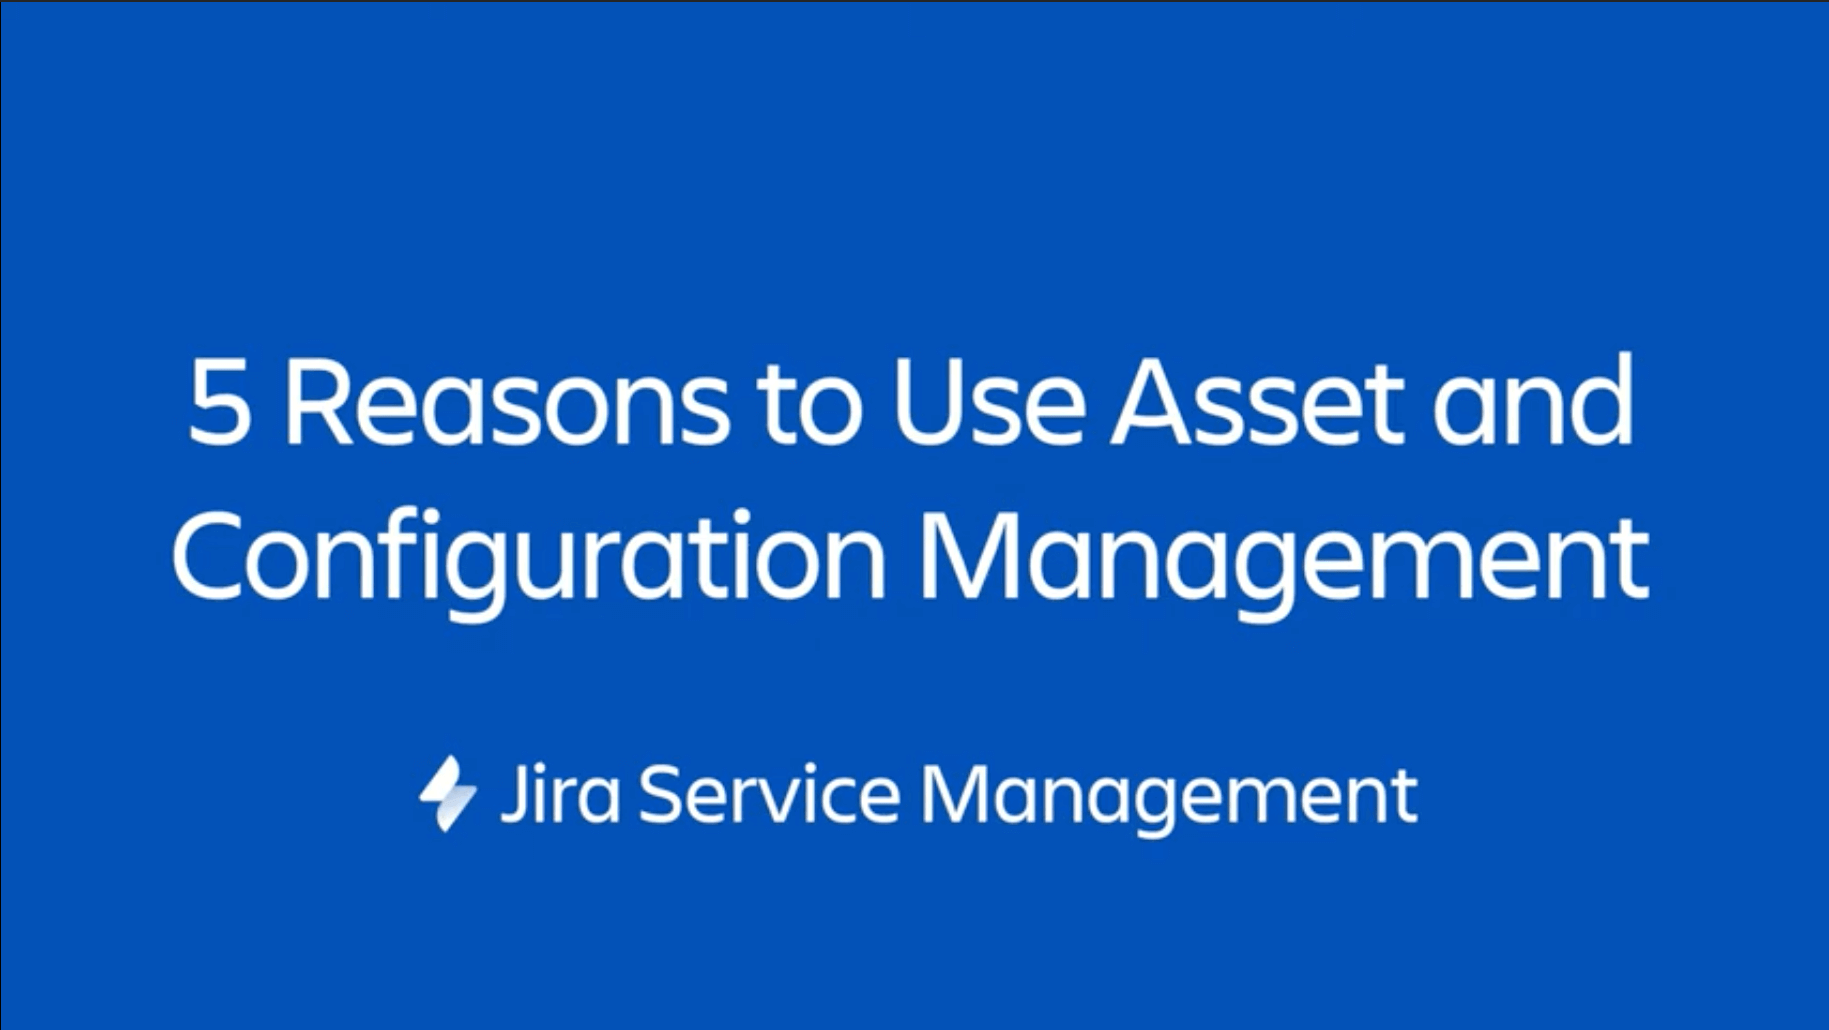 Jira Service Management를 사용하여 Jira Software의 효과를 한 단계 더 업그레이드